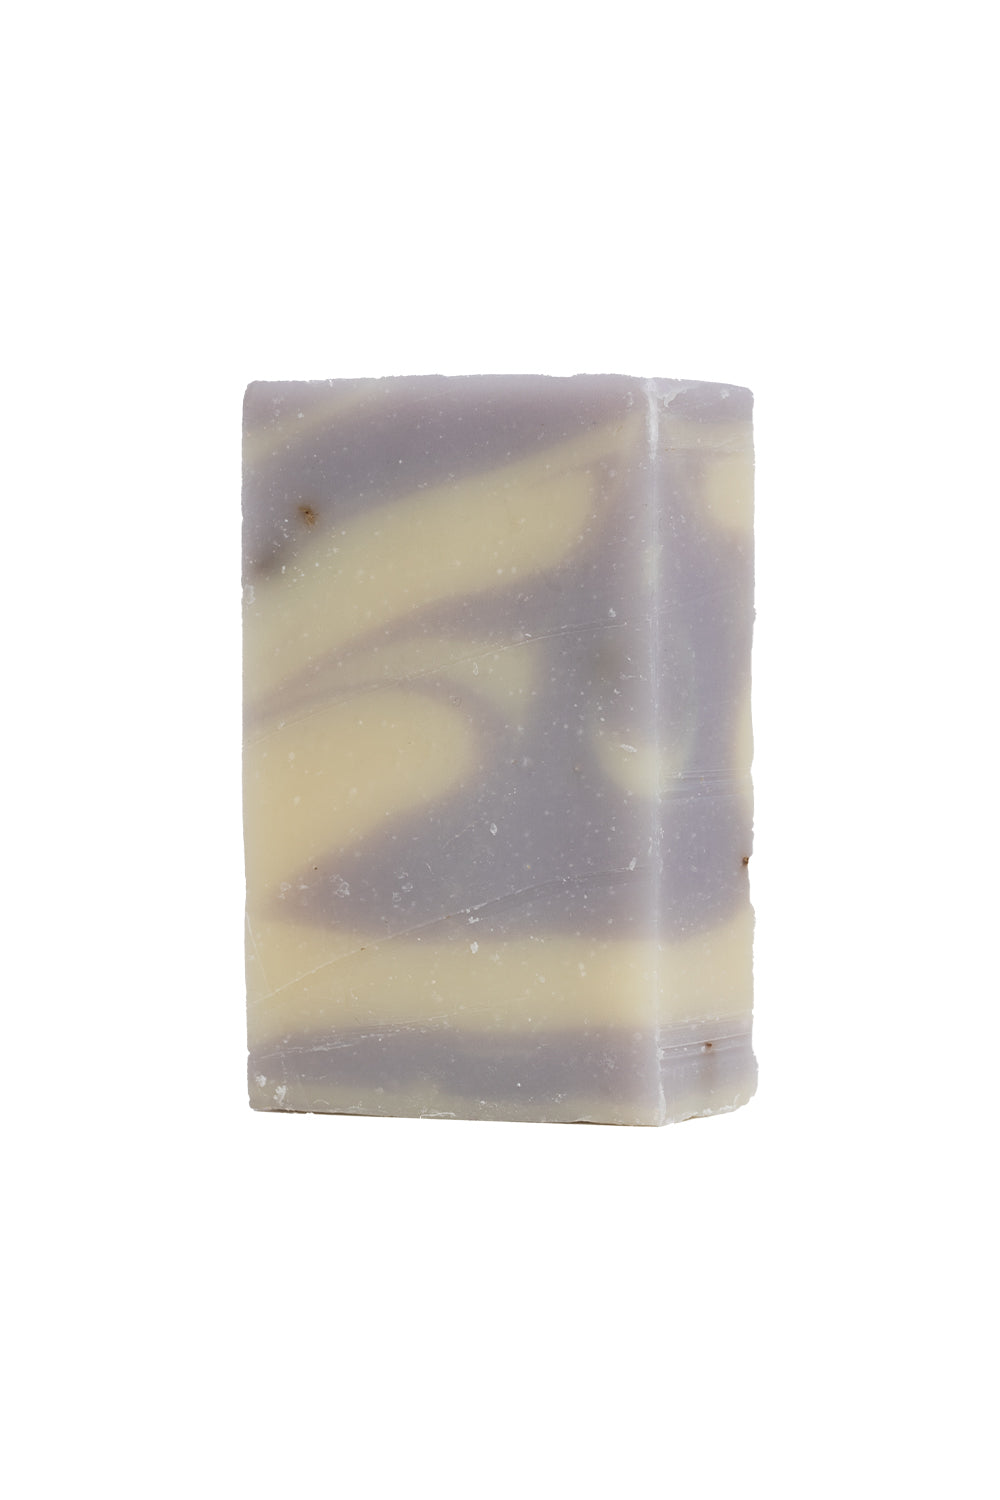 vegan lavender soap without palm oil